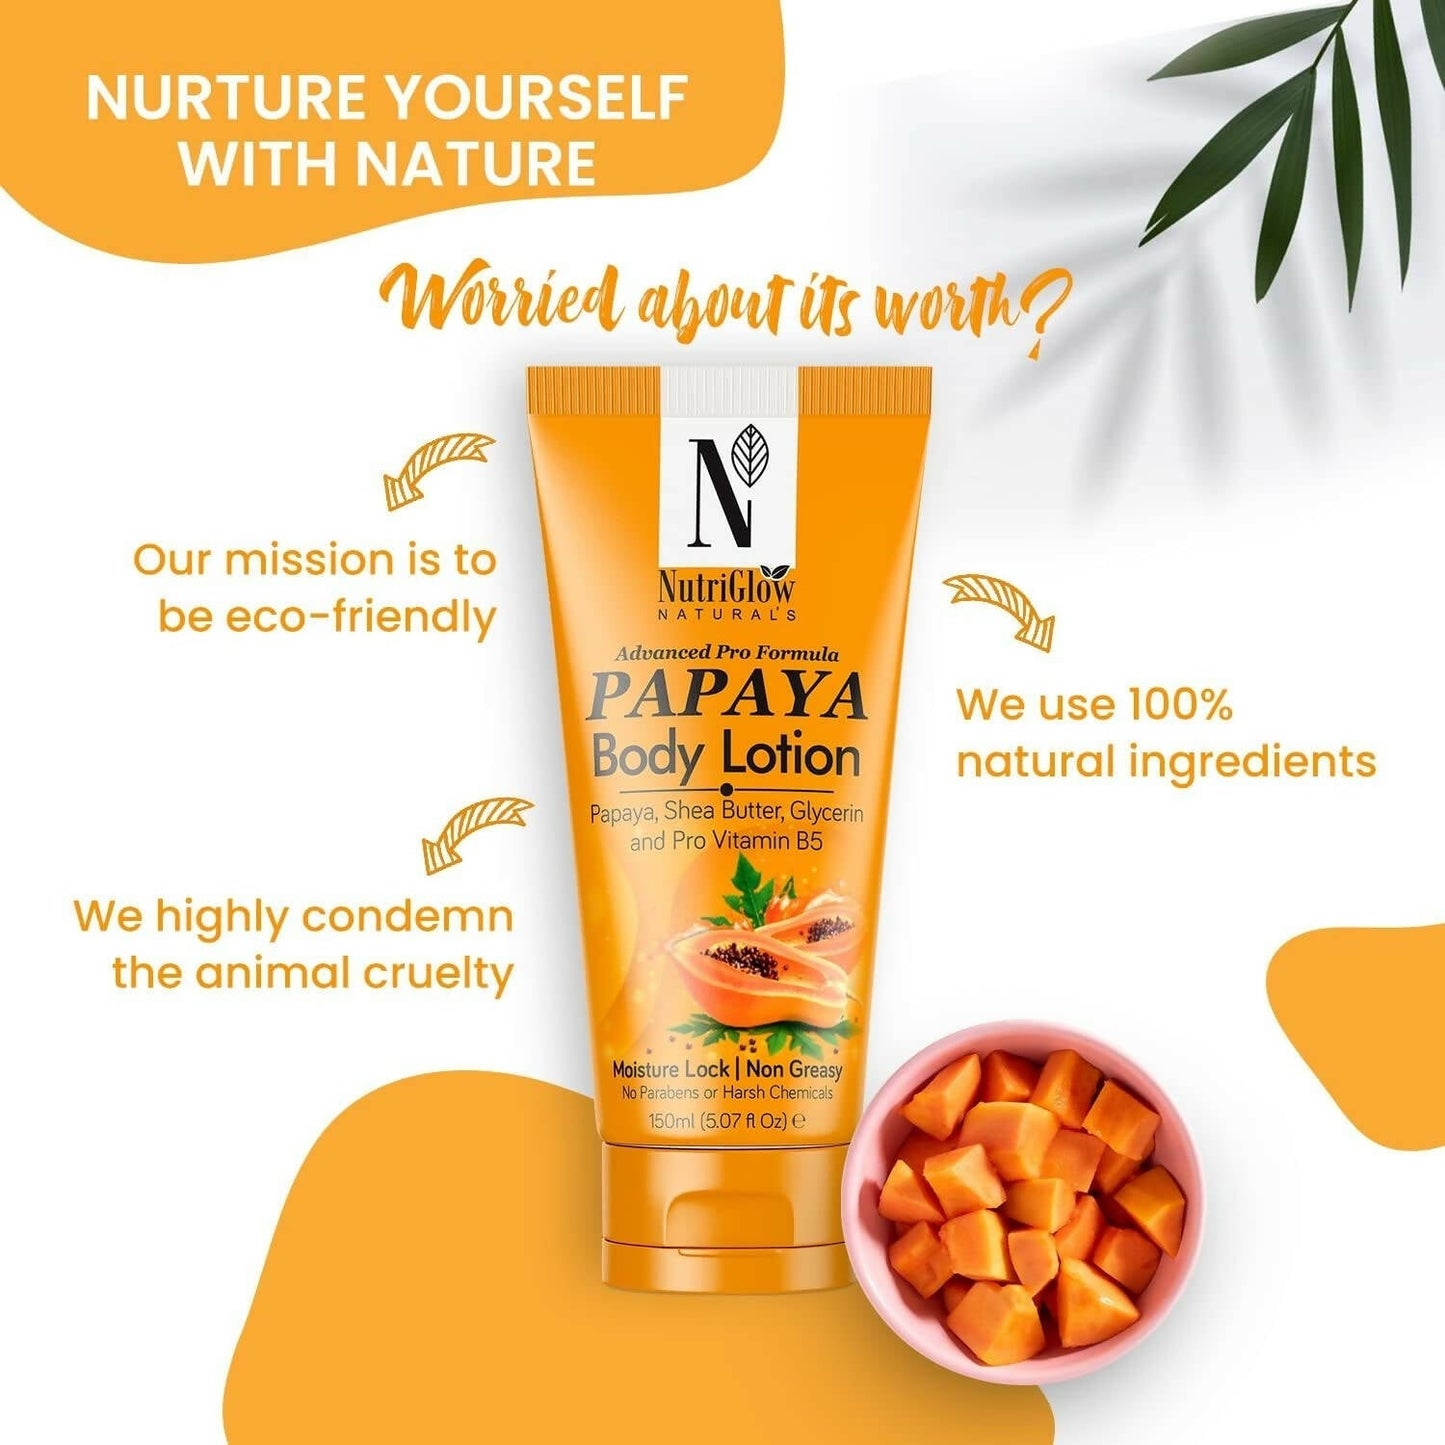 NutriGlow NATURAL'S Advanced Pro Formula Papaya Body Lotion